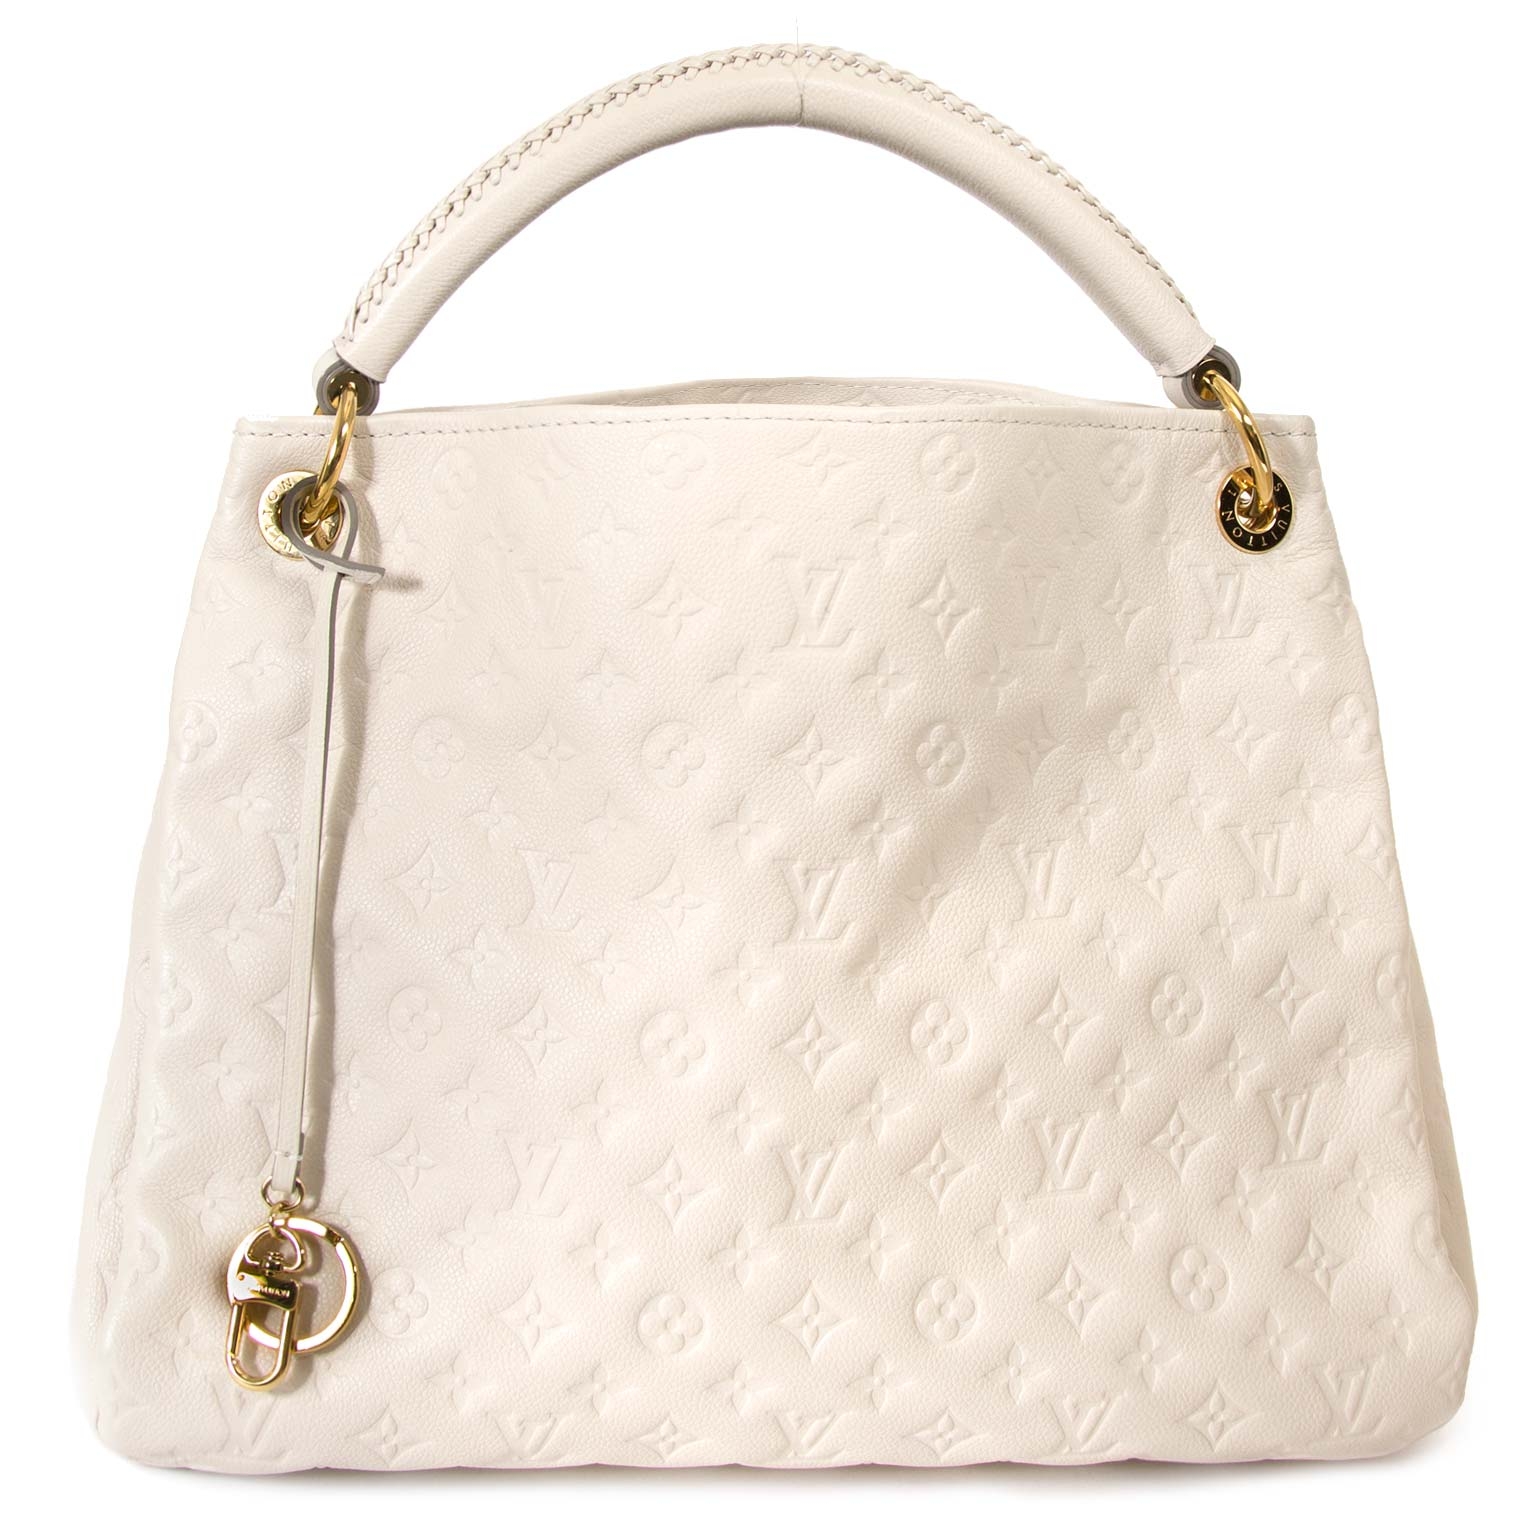 Louis Vuitton - Authenticated Artsy Handbag - Cloth White for Women, Good Condition